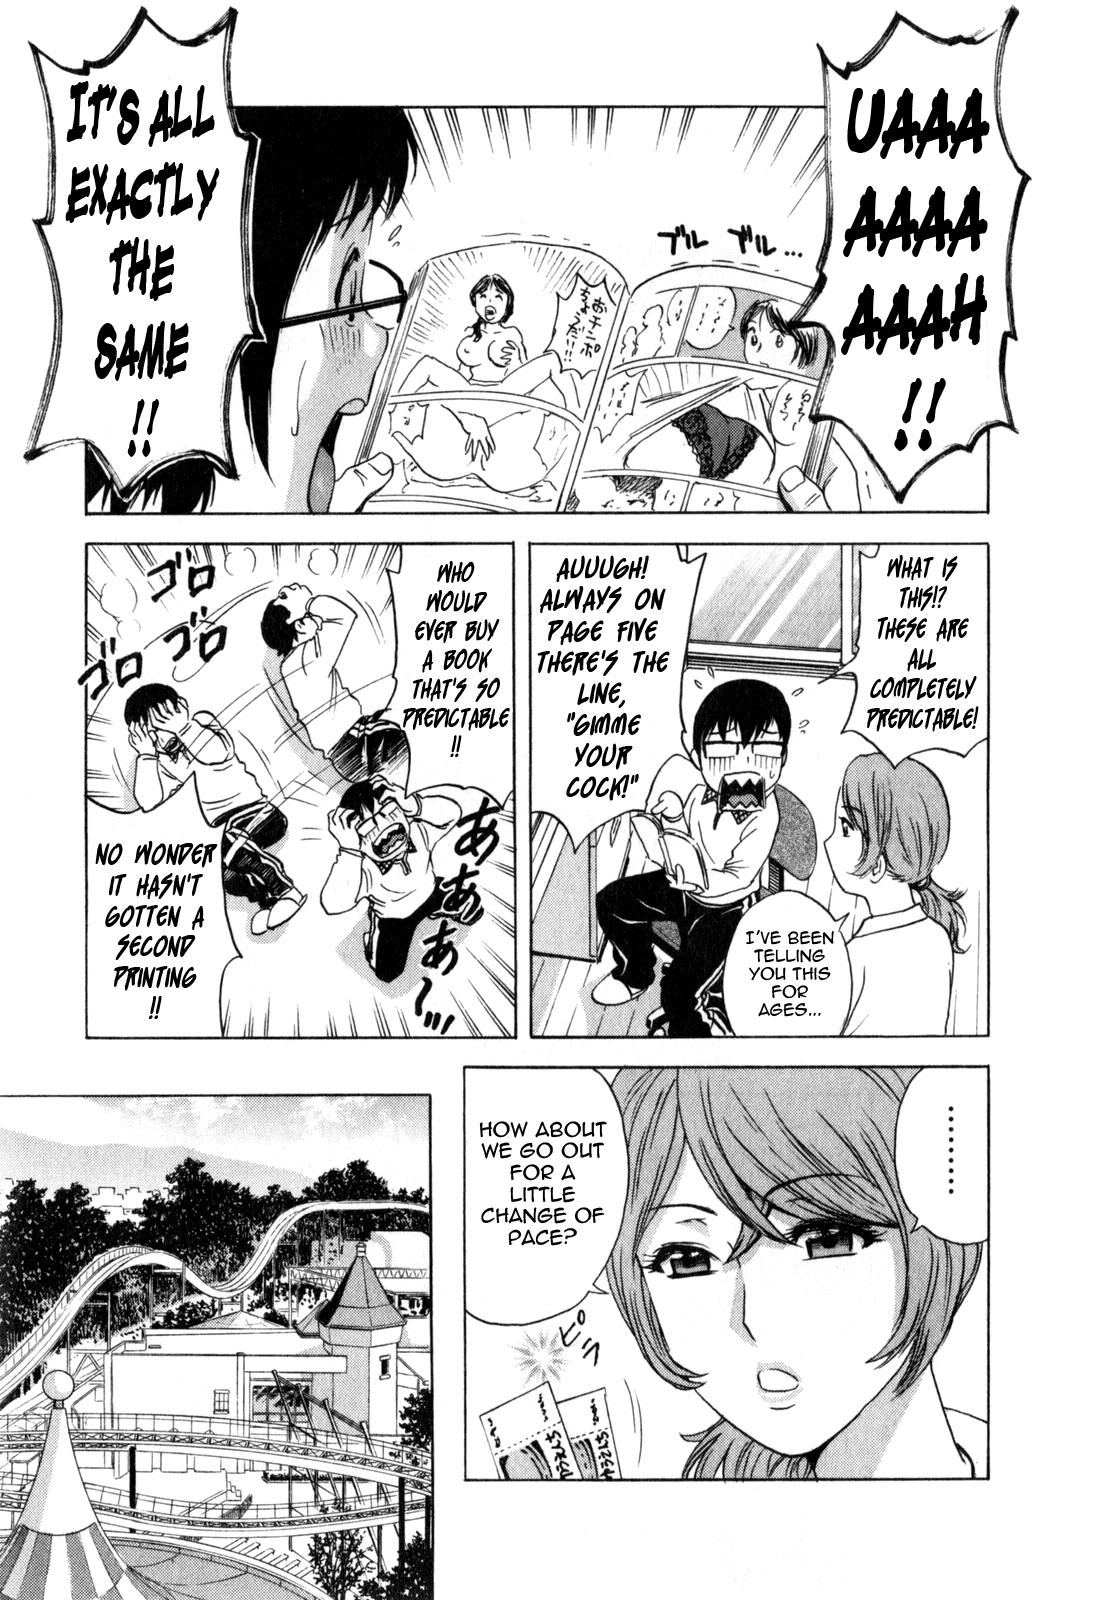 [Hidemaru] Life with Married Women Just Like a Manga 3 - Ch. 1-5 [English] {Tadanohito} 29